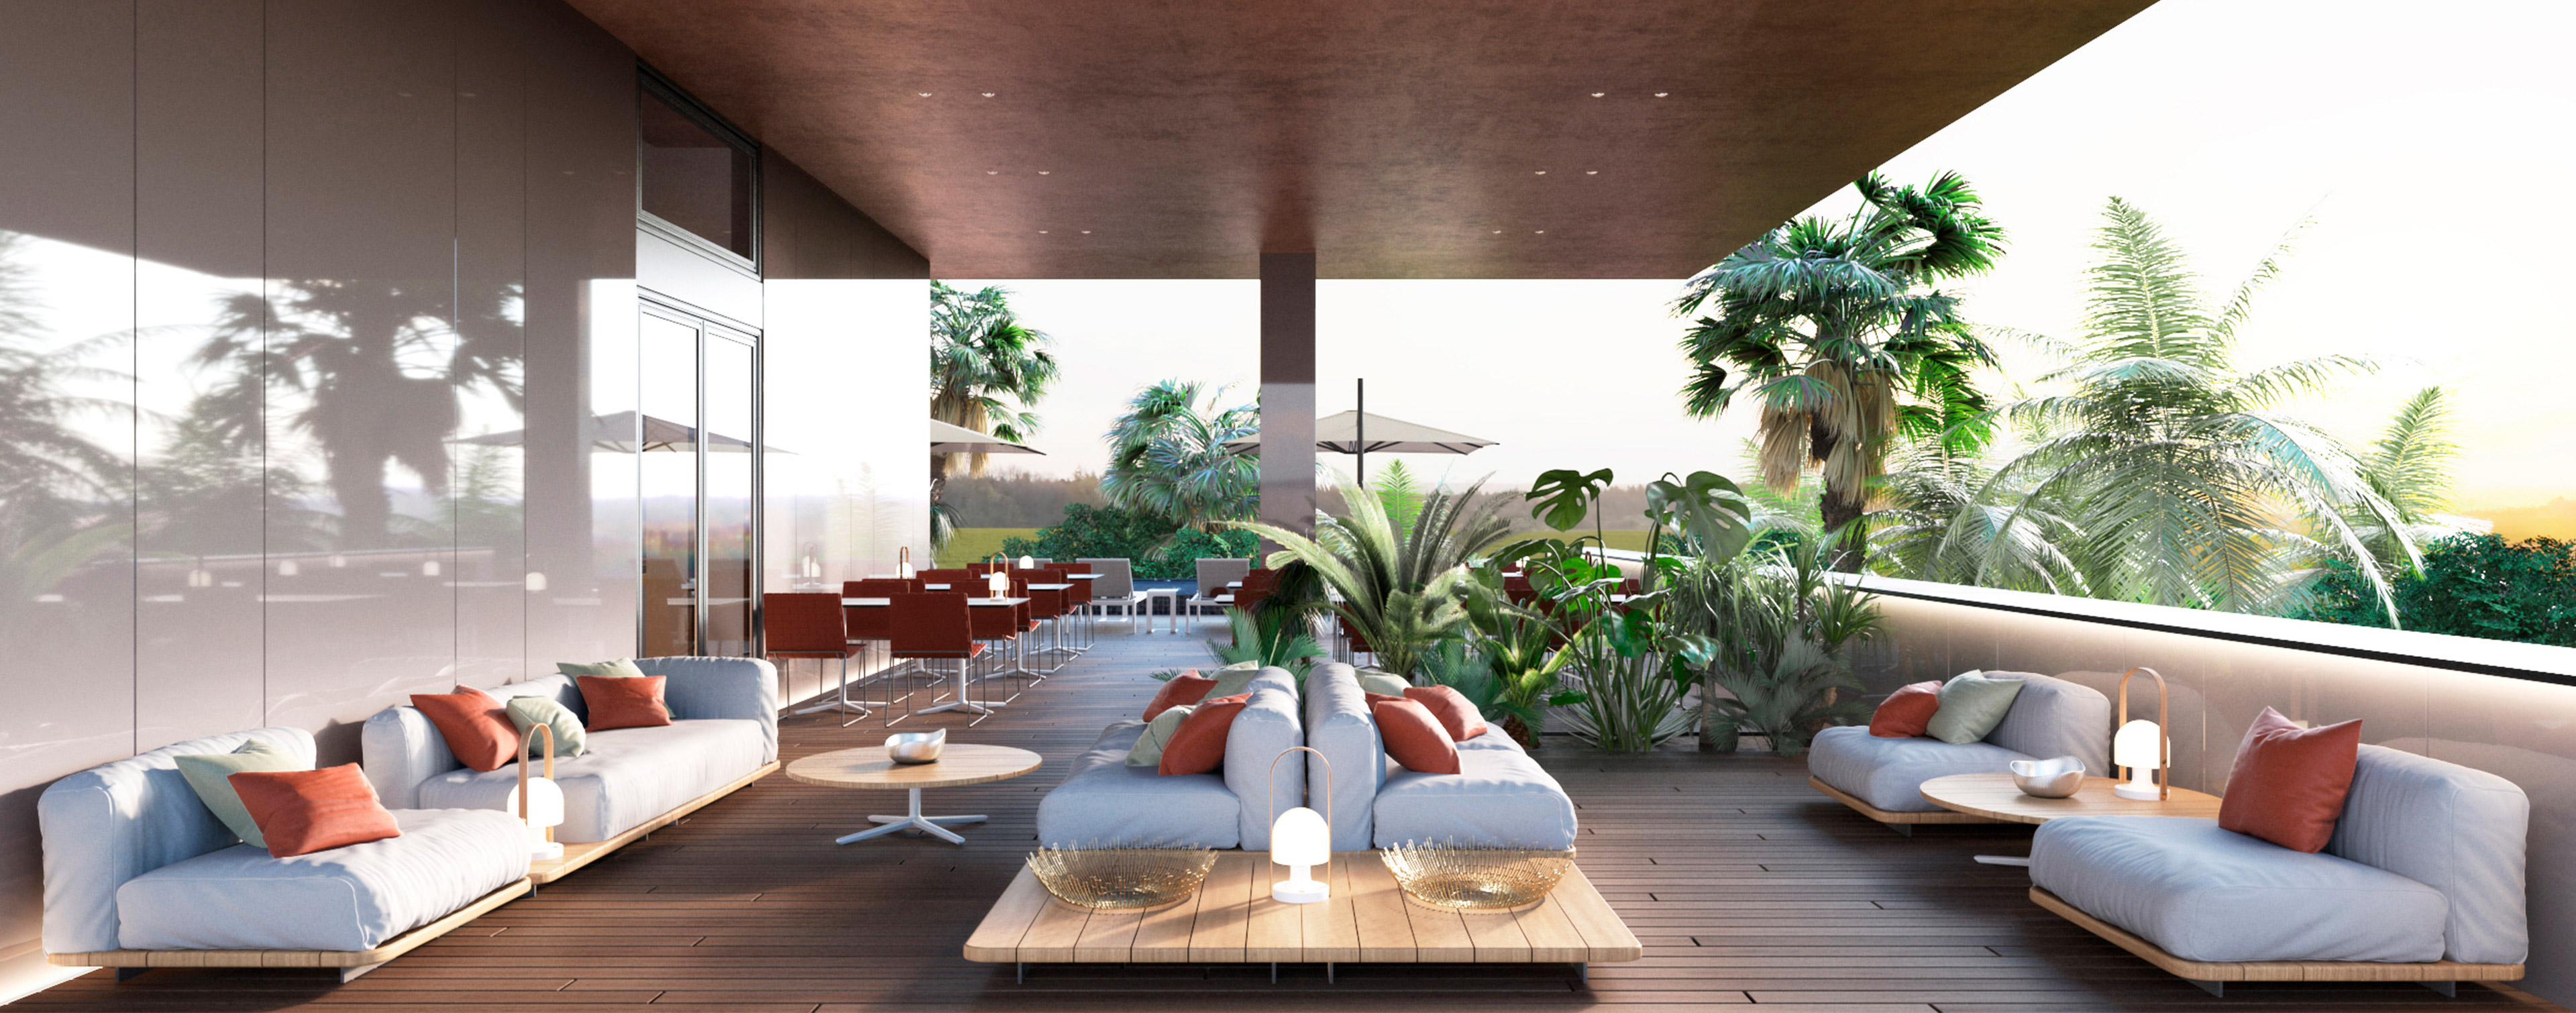 luv studio luxury architects dakkar yaas tower hotel building IMG 01 - LUV Studio - Architecture et design - Barcelone